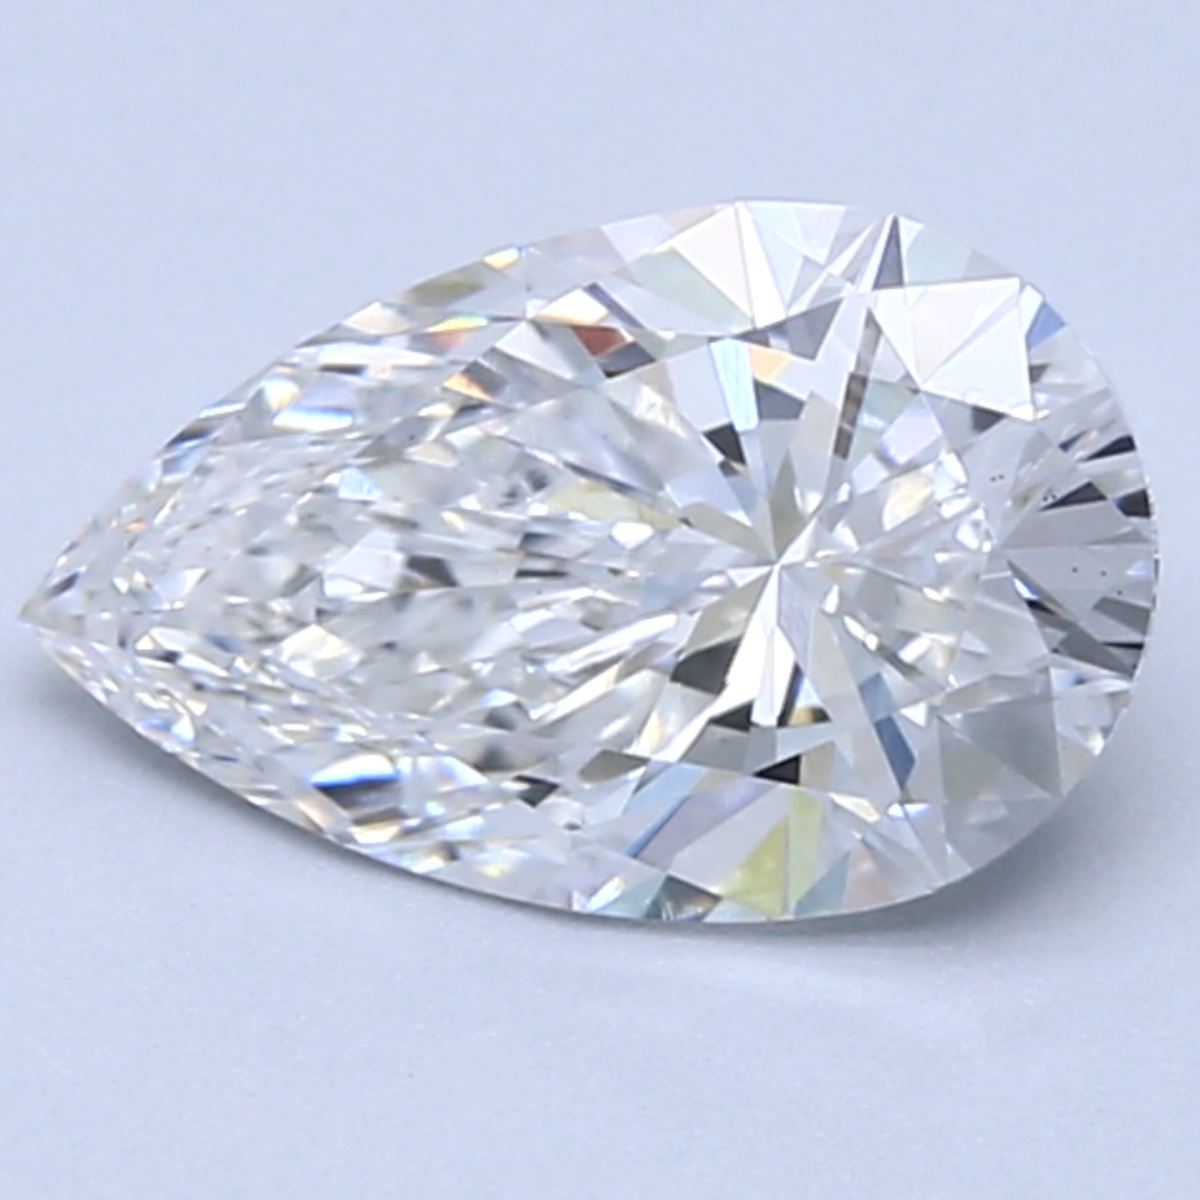 1.66 Carat Pear Cut Diamond